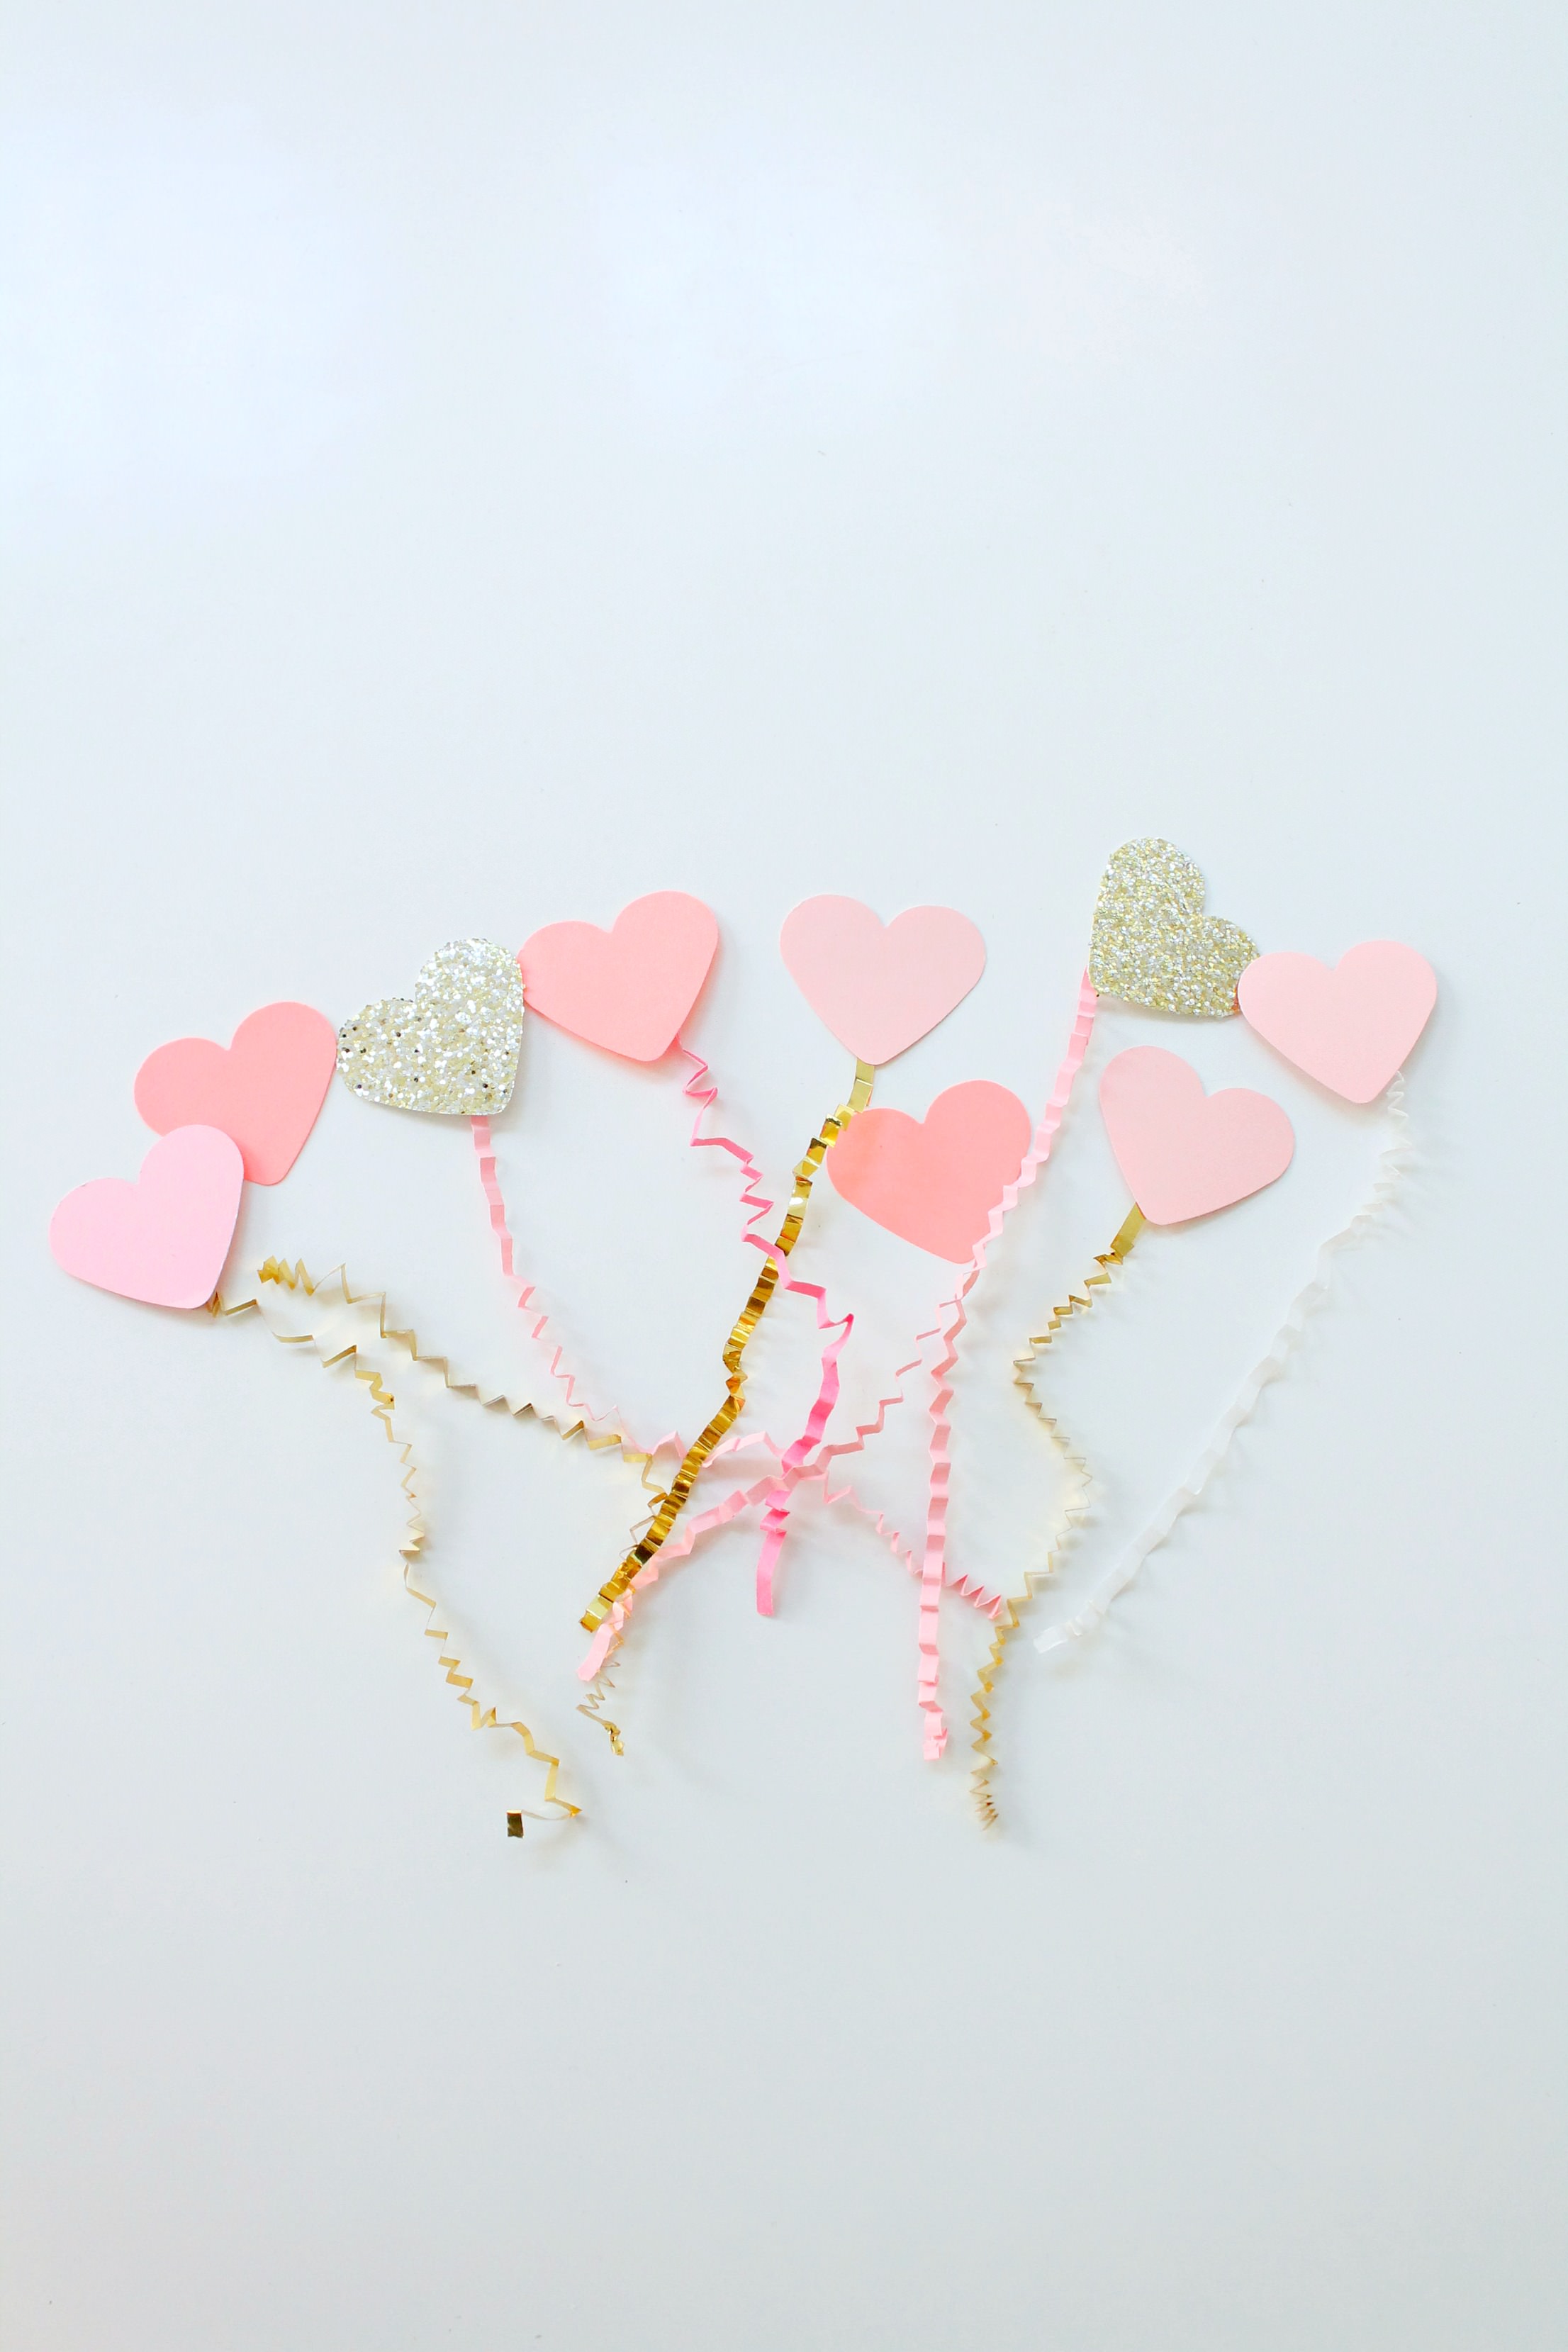 Paper-heart-balloons-designed-by-Geraldine-Tan-of-Little-Big-Bell-blog